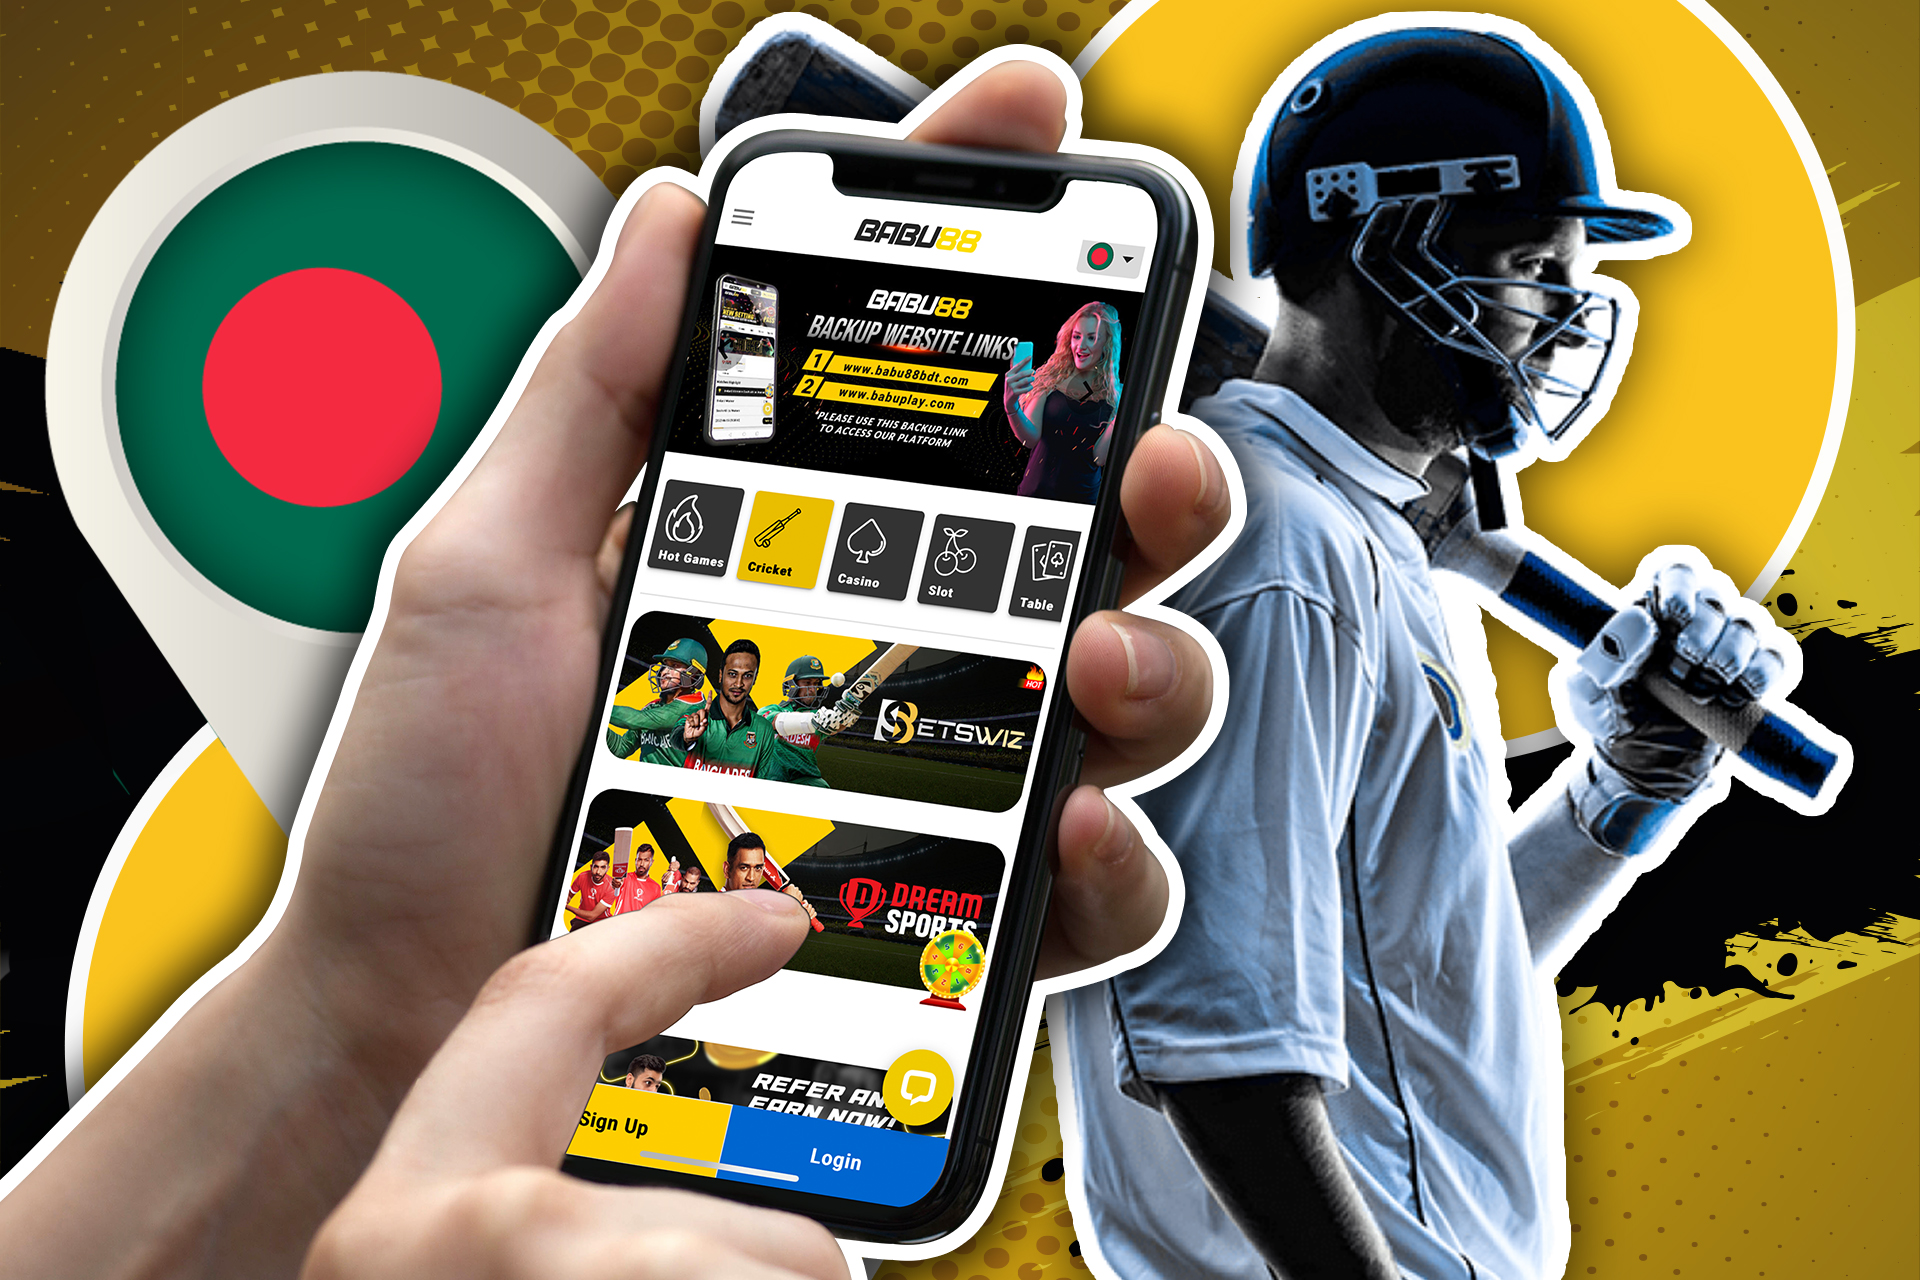 You can also bet on cricket via the Babu88 mobile app.